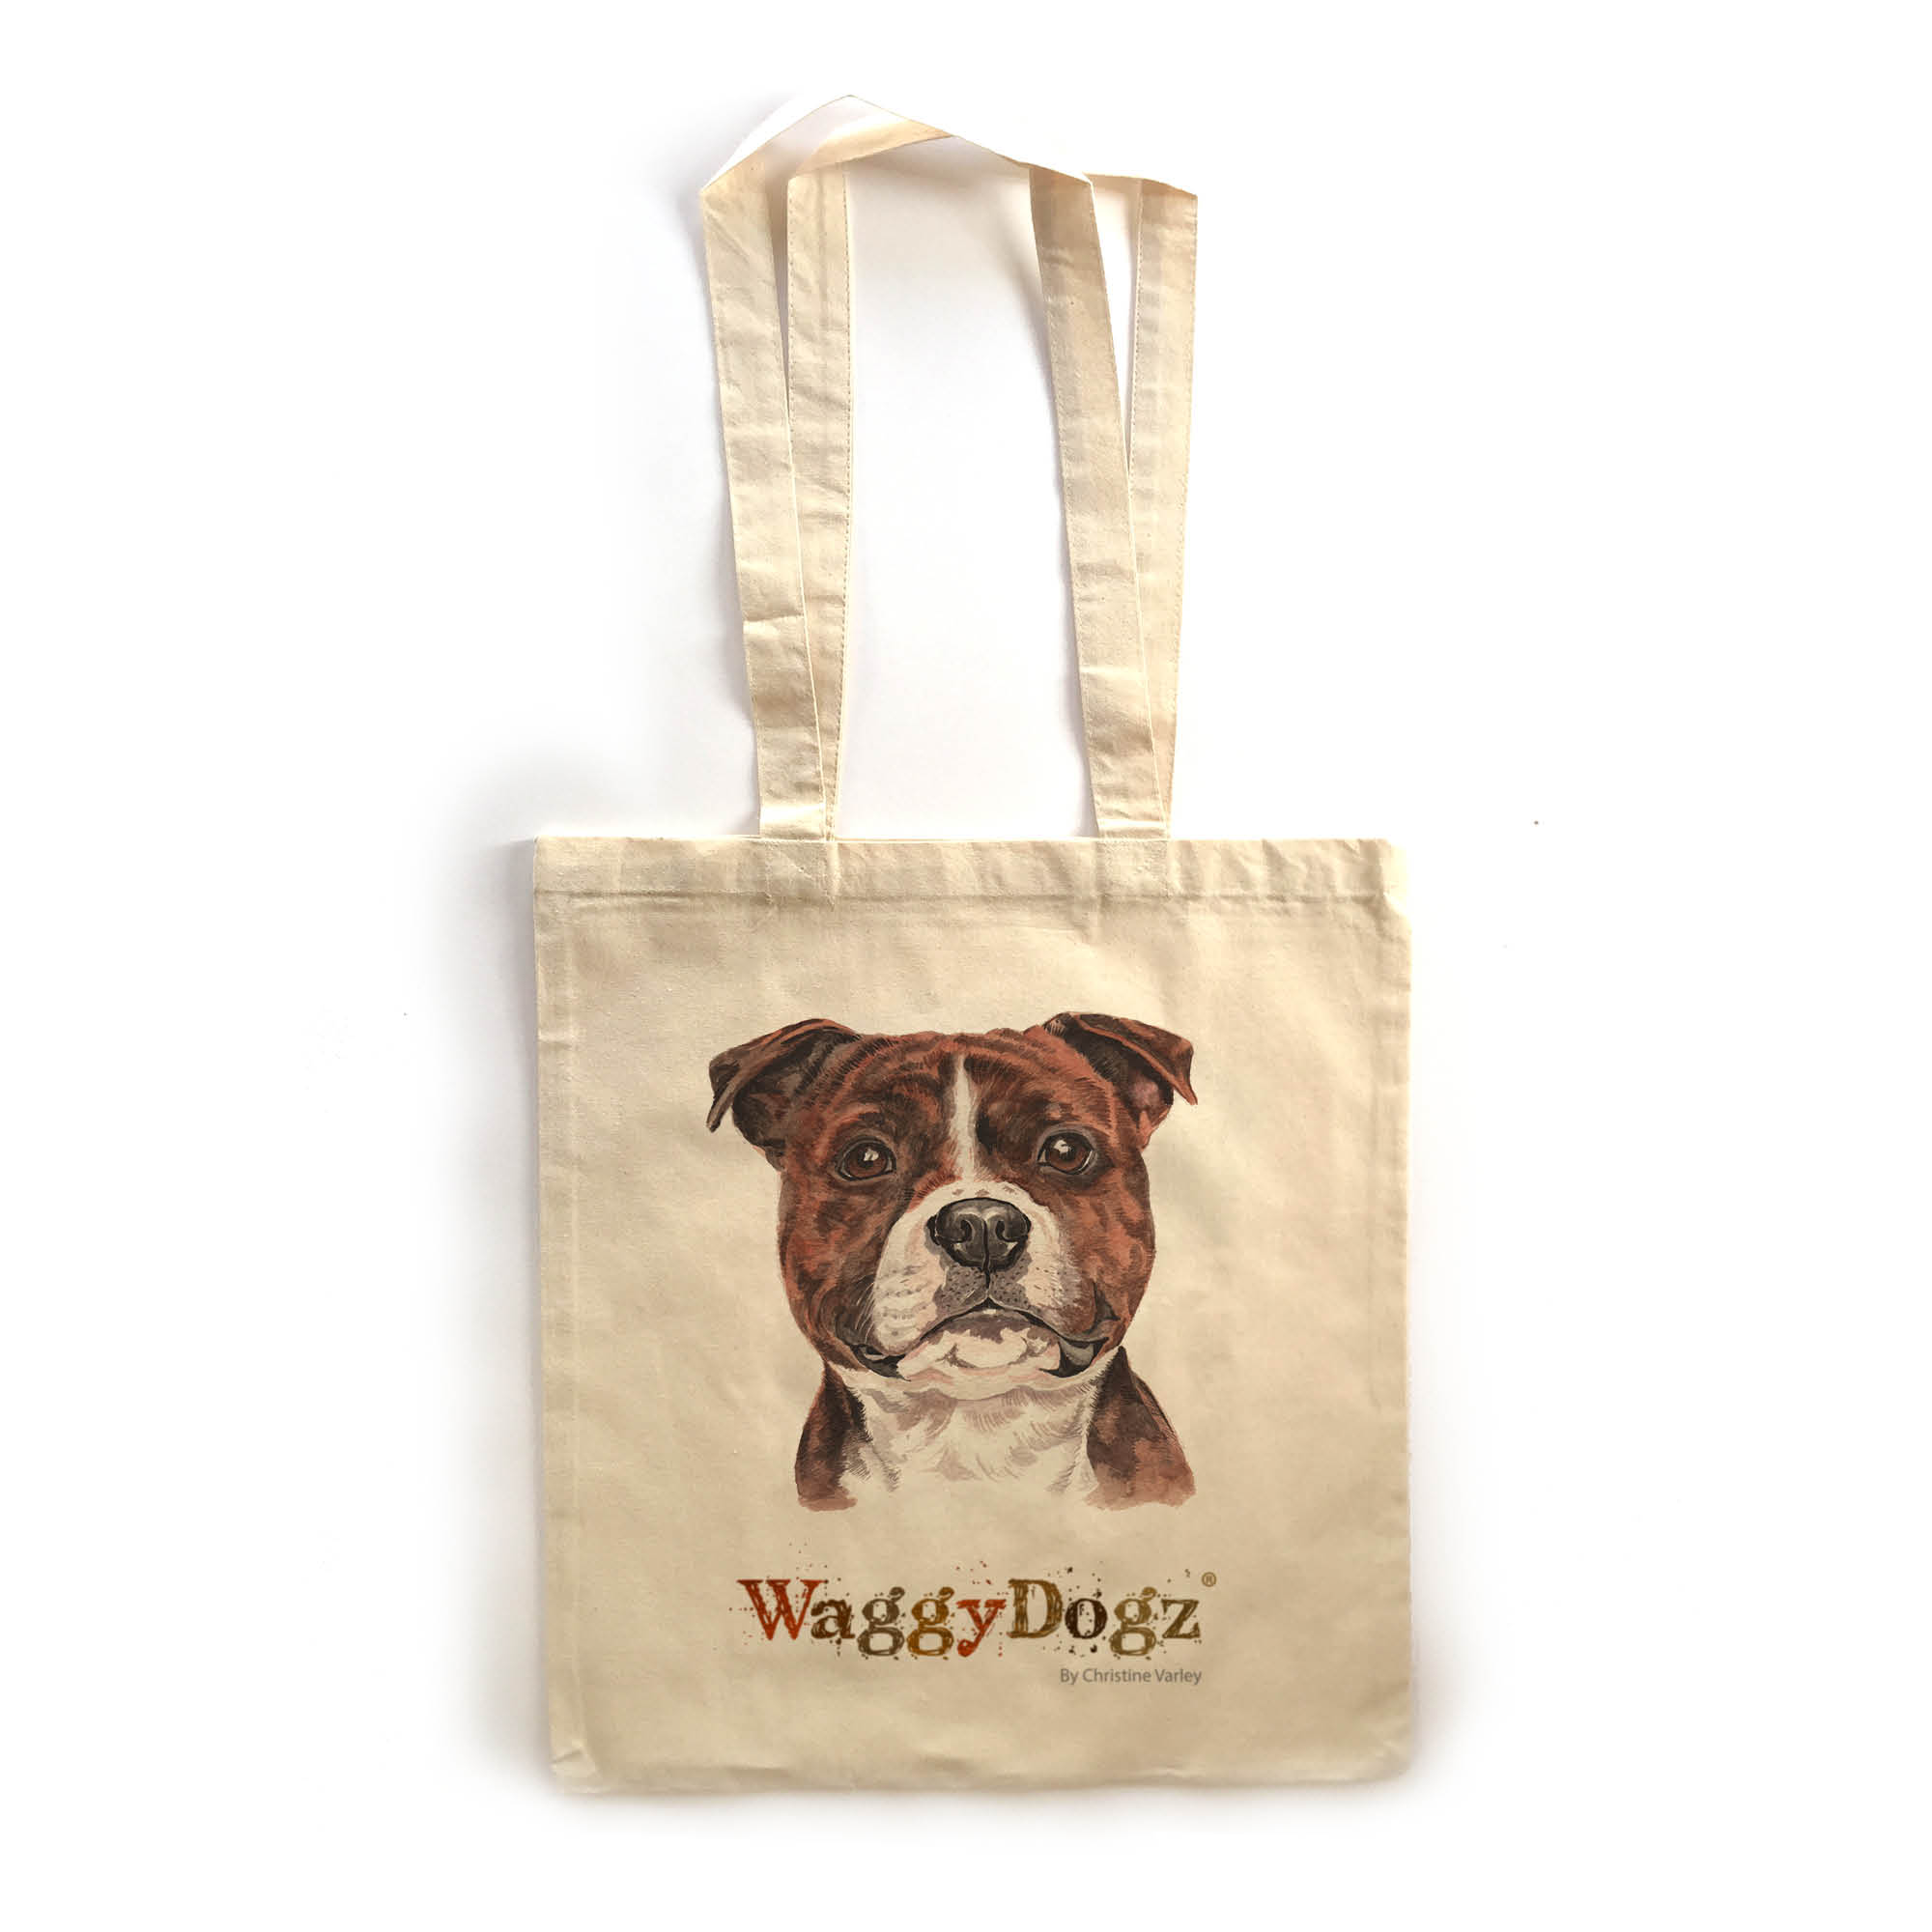 Staffordshire Bull Terrier Dog Tote Bag (TBG-175) - WaggyDogz